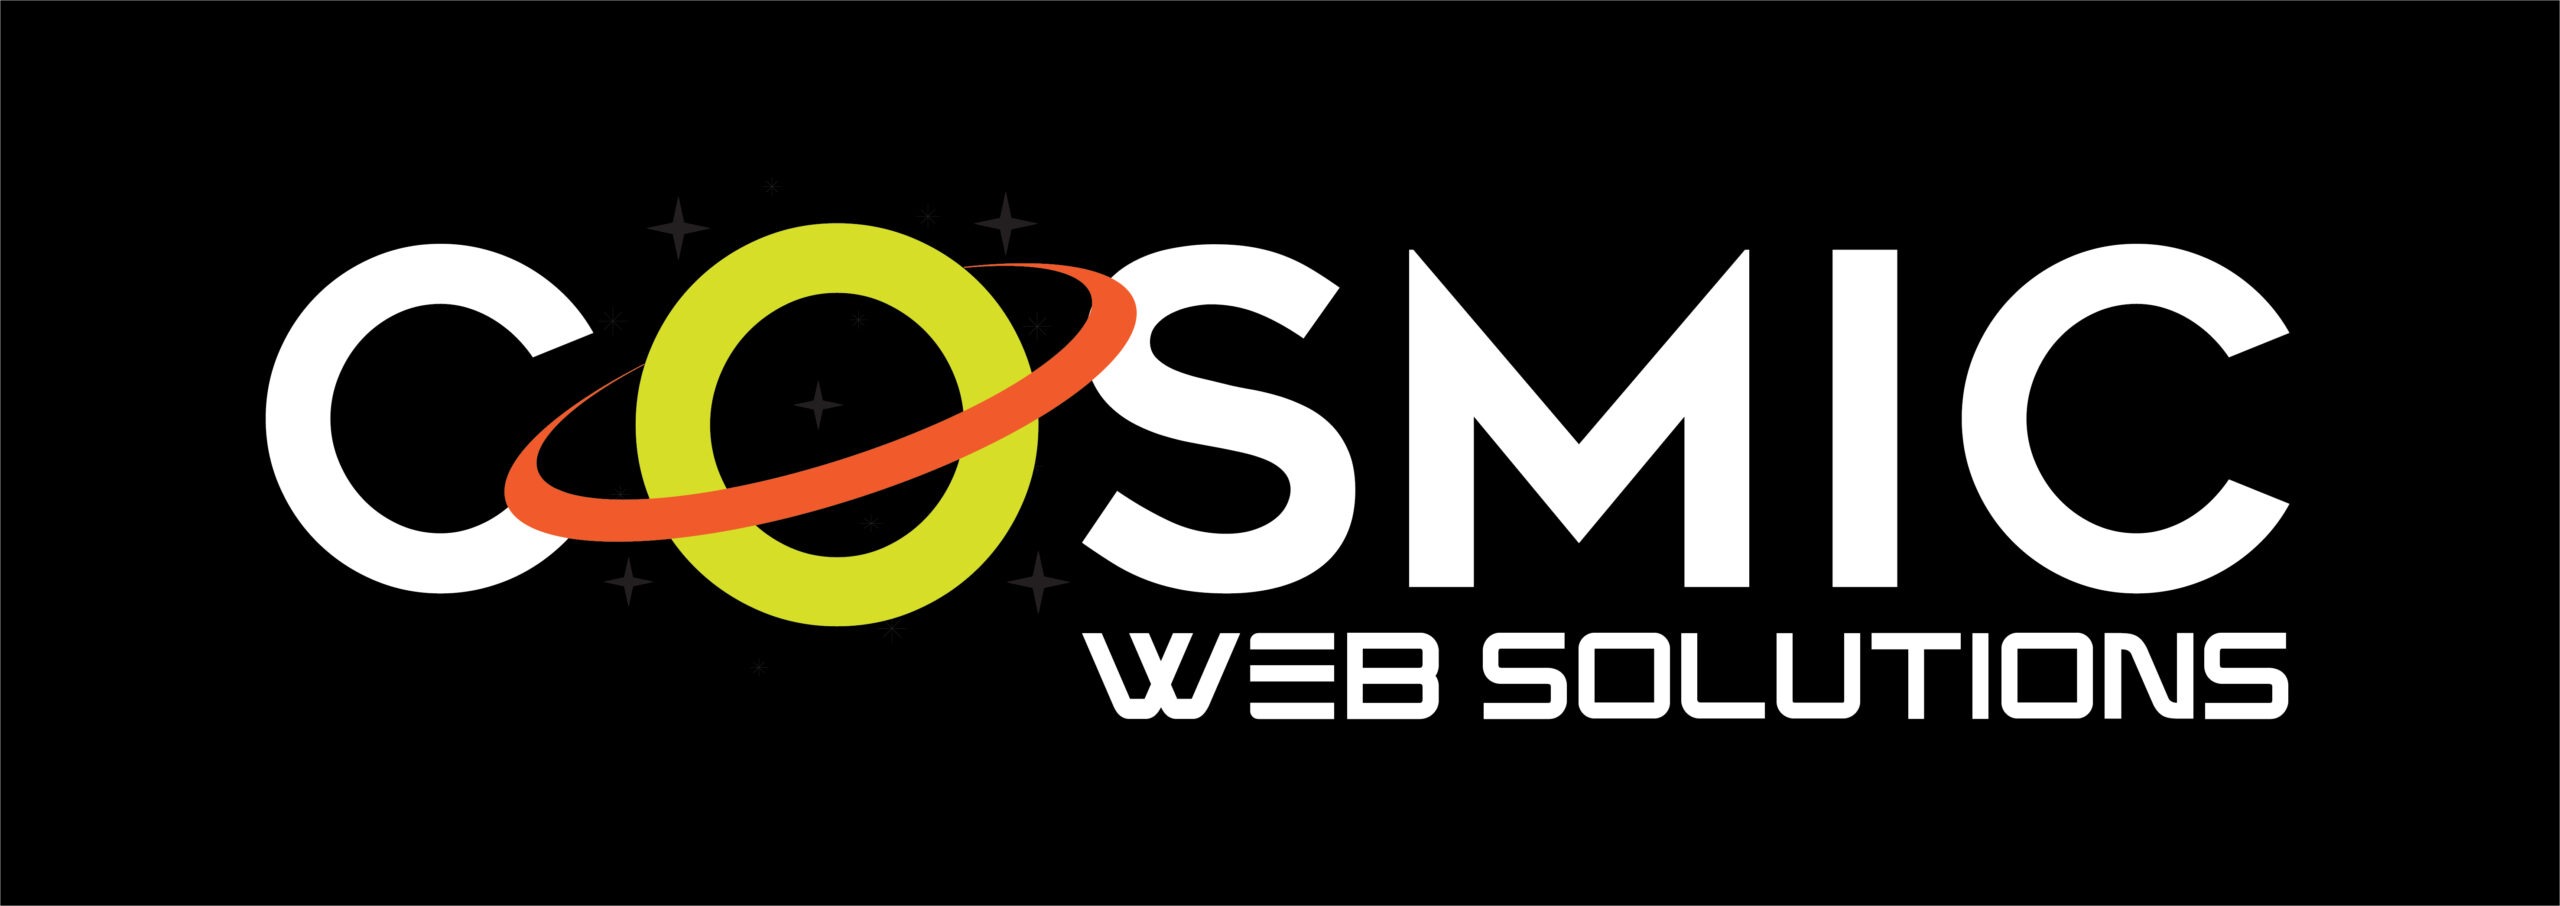 a logo for a web company